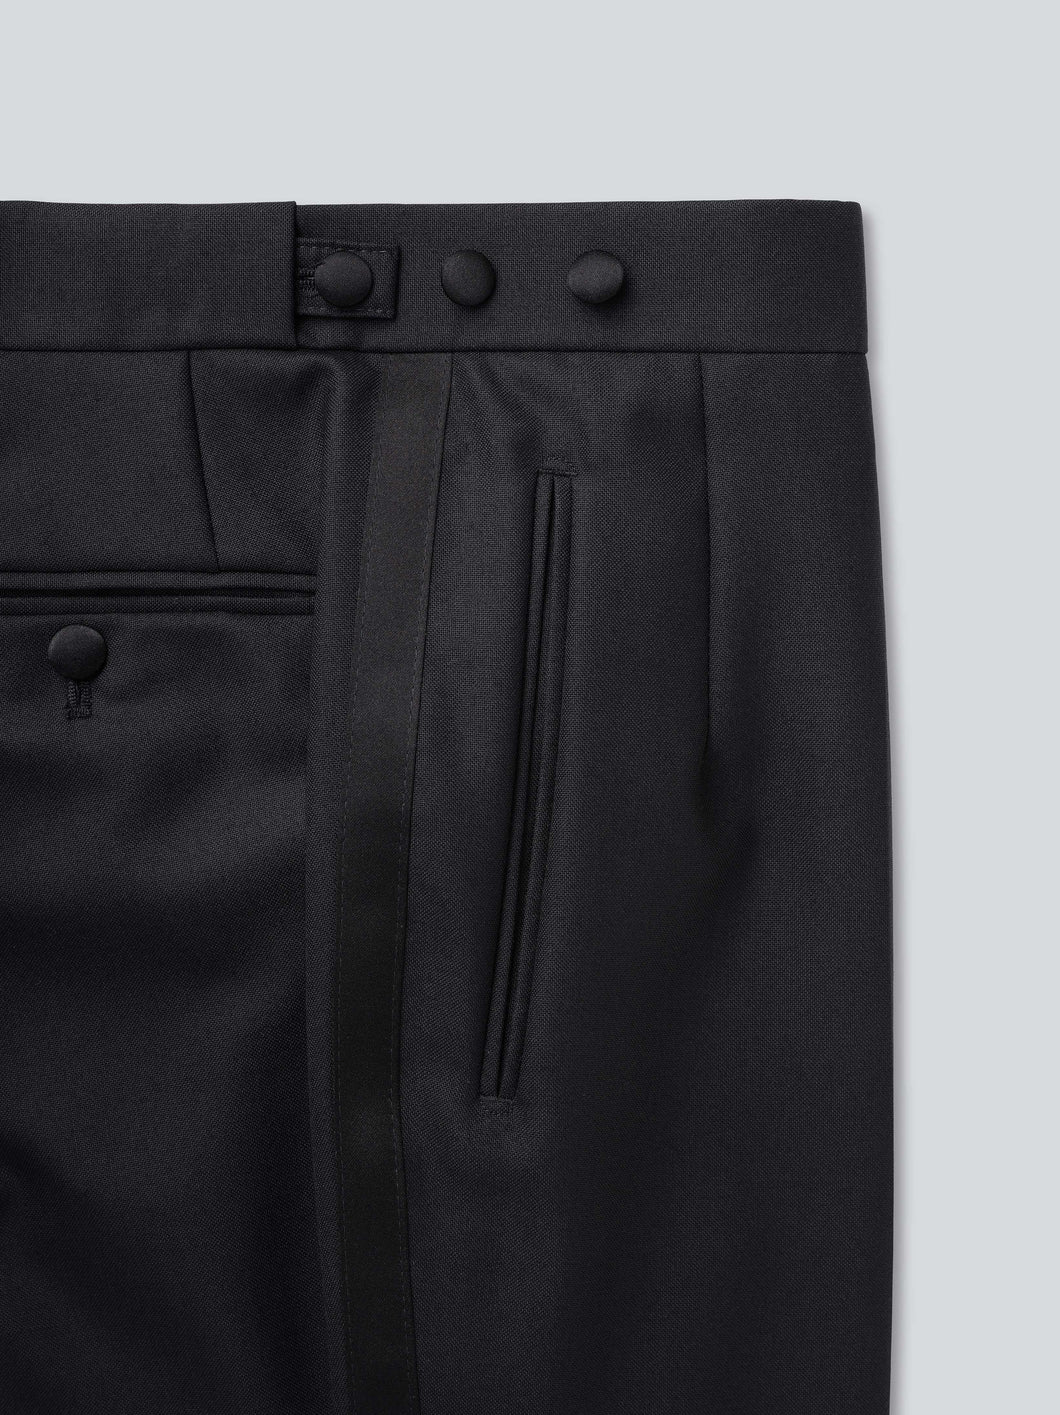 Black Dinner Suit Trousers